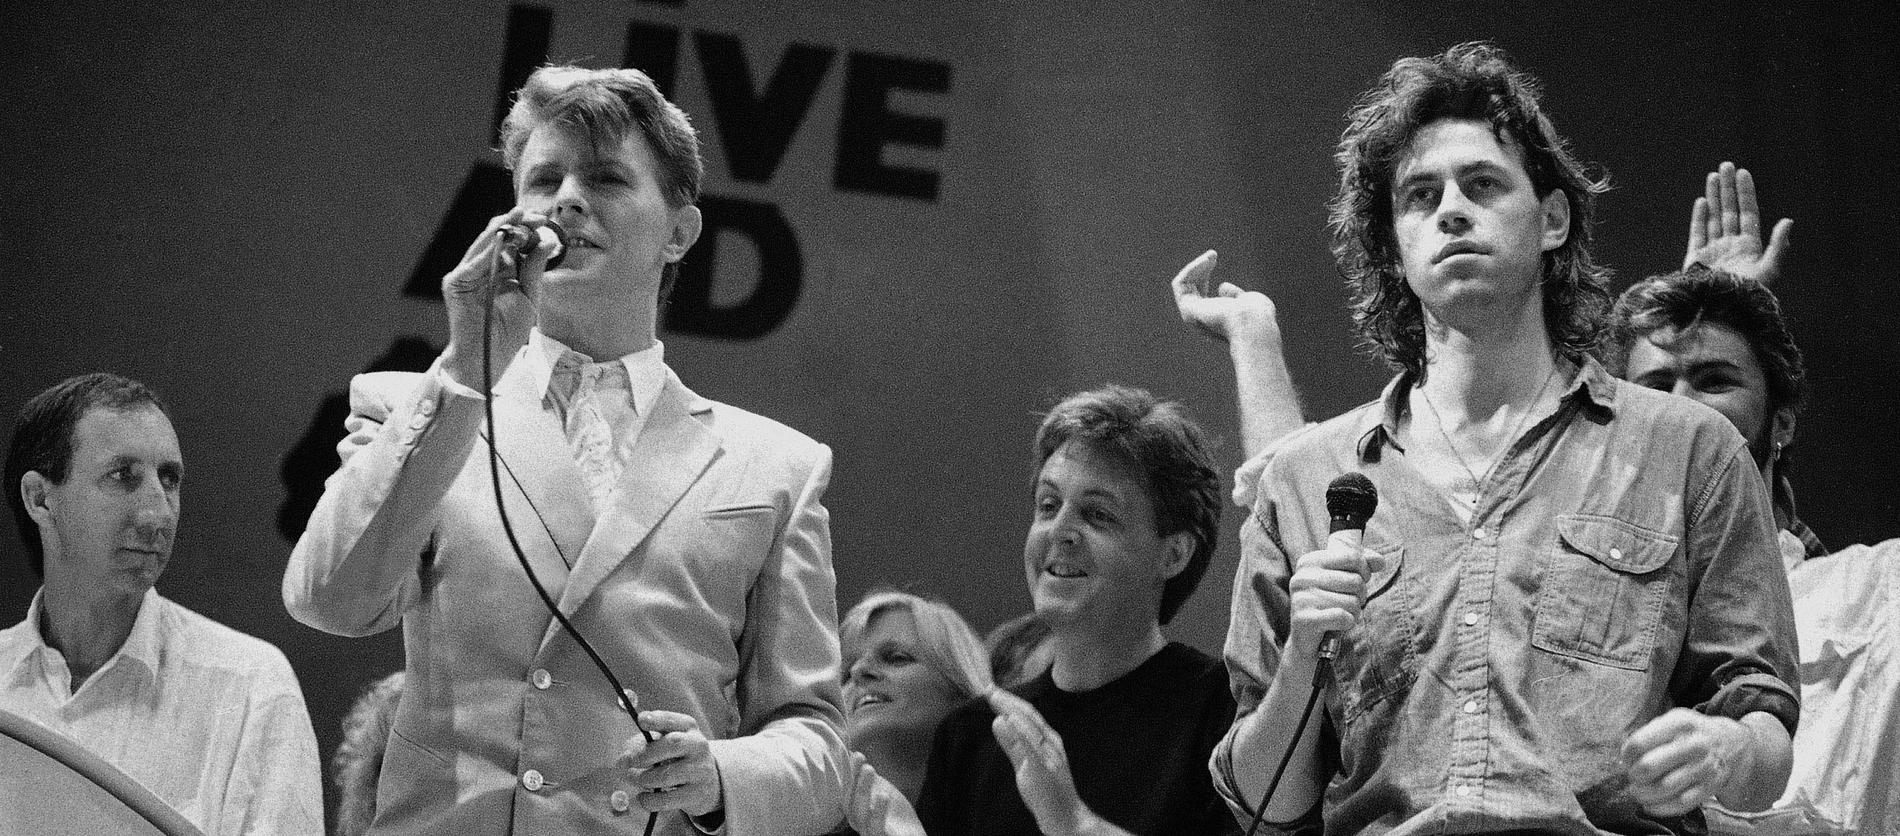 David Bowie och Bob Geldof, i bakgrunden syns även Pete Townsend, Paul McCartney och dold George Michael.